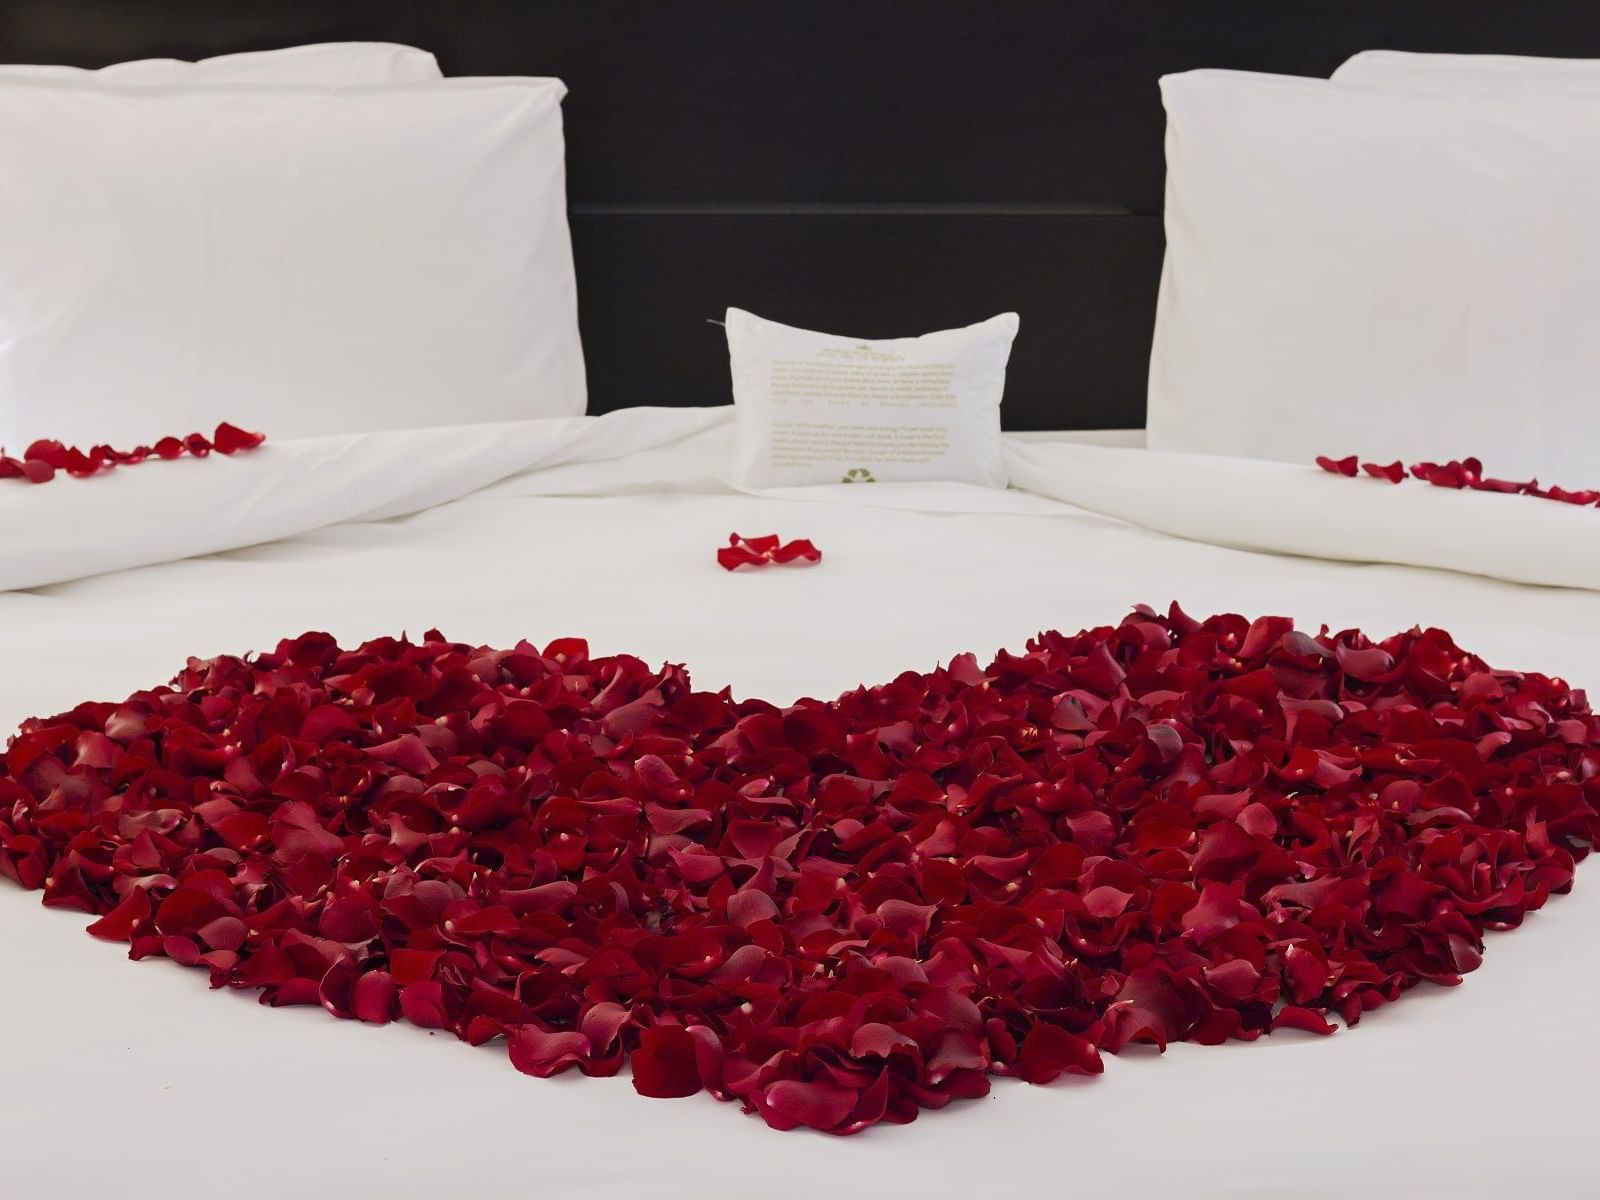 Honeymoon Bed décor in Junior Suite at Marquis Reforma